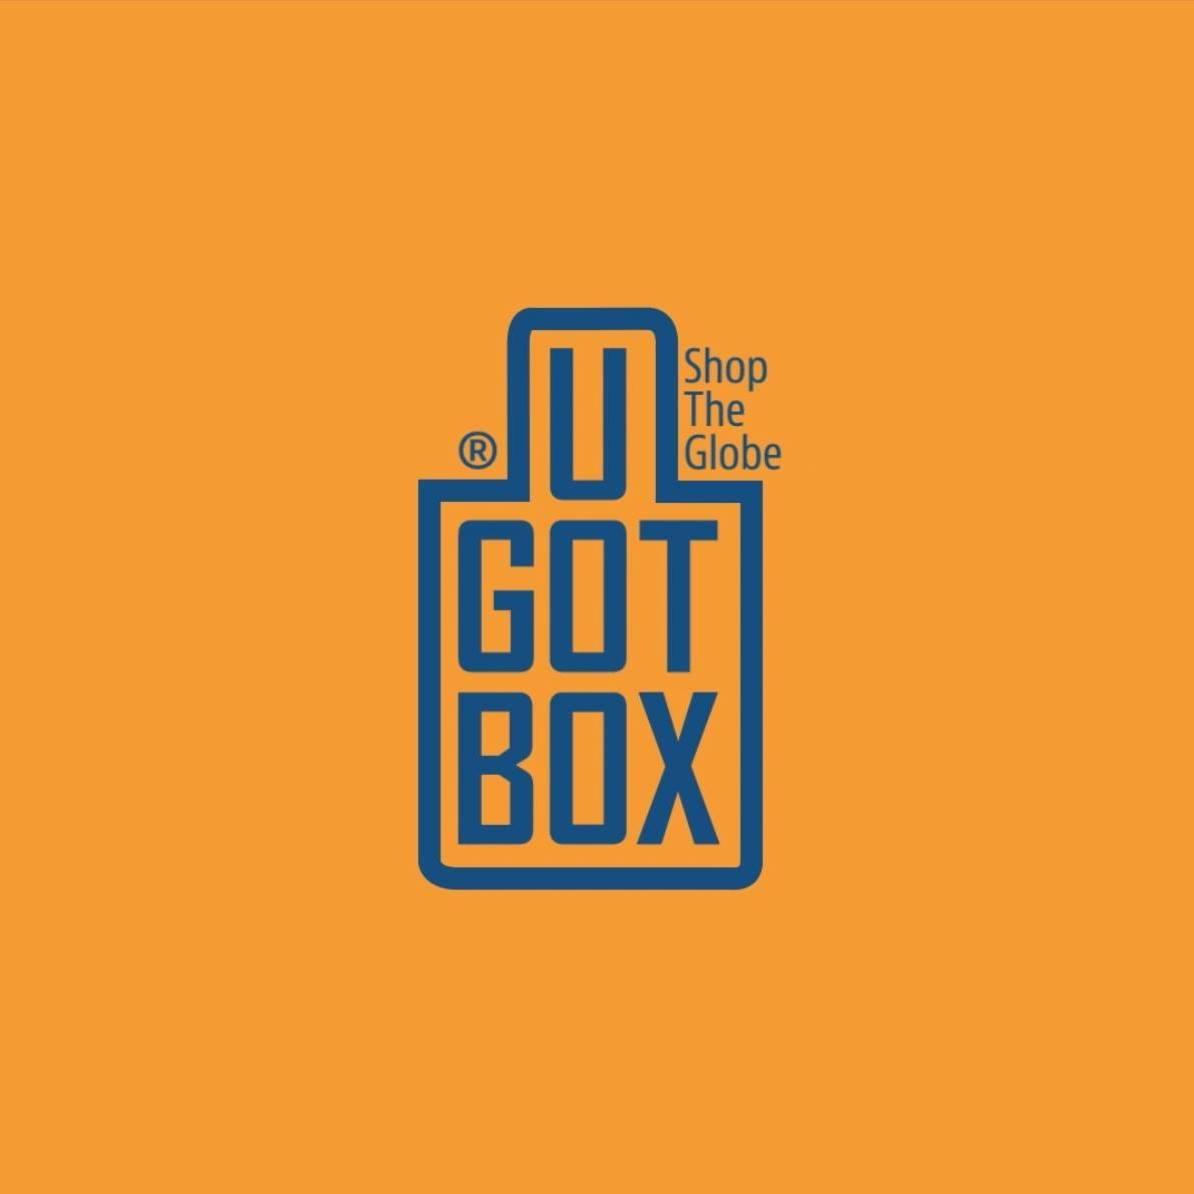 U Got Box